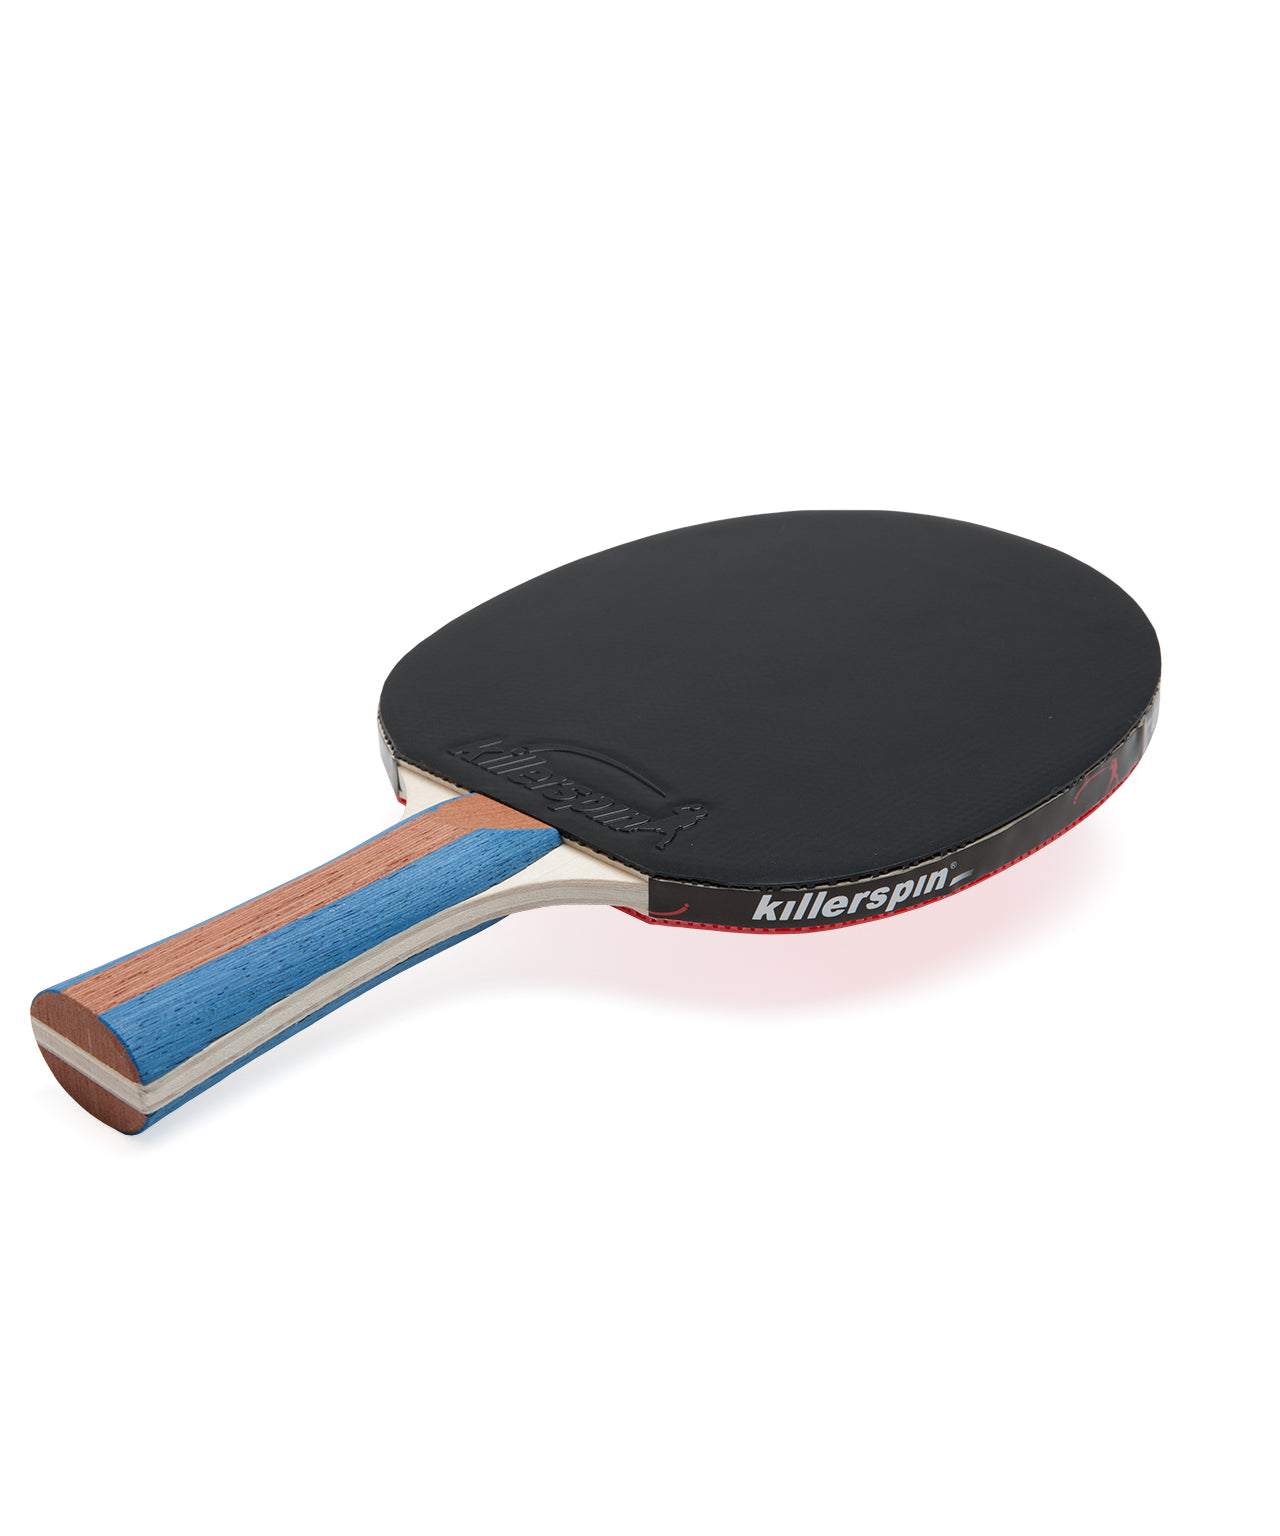 Killerspin Ping Pong Paddle Set JetSet4 - Black Rubber